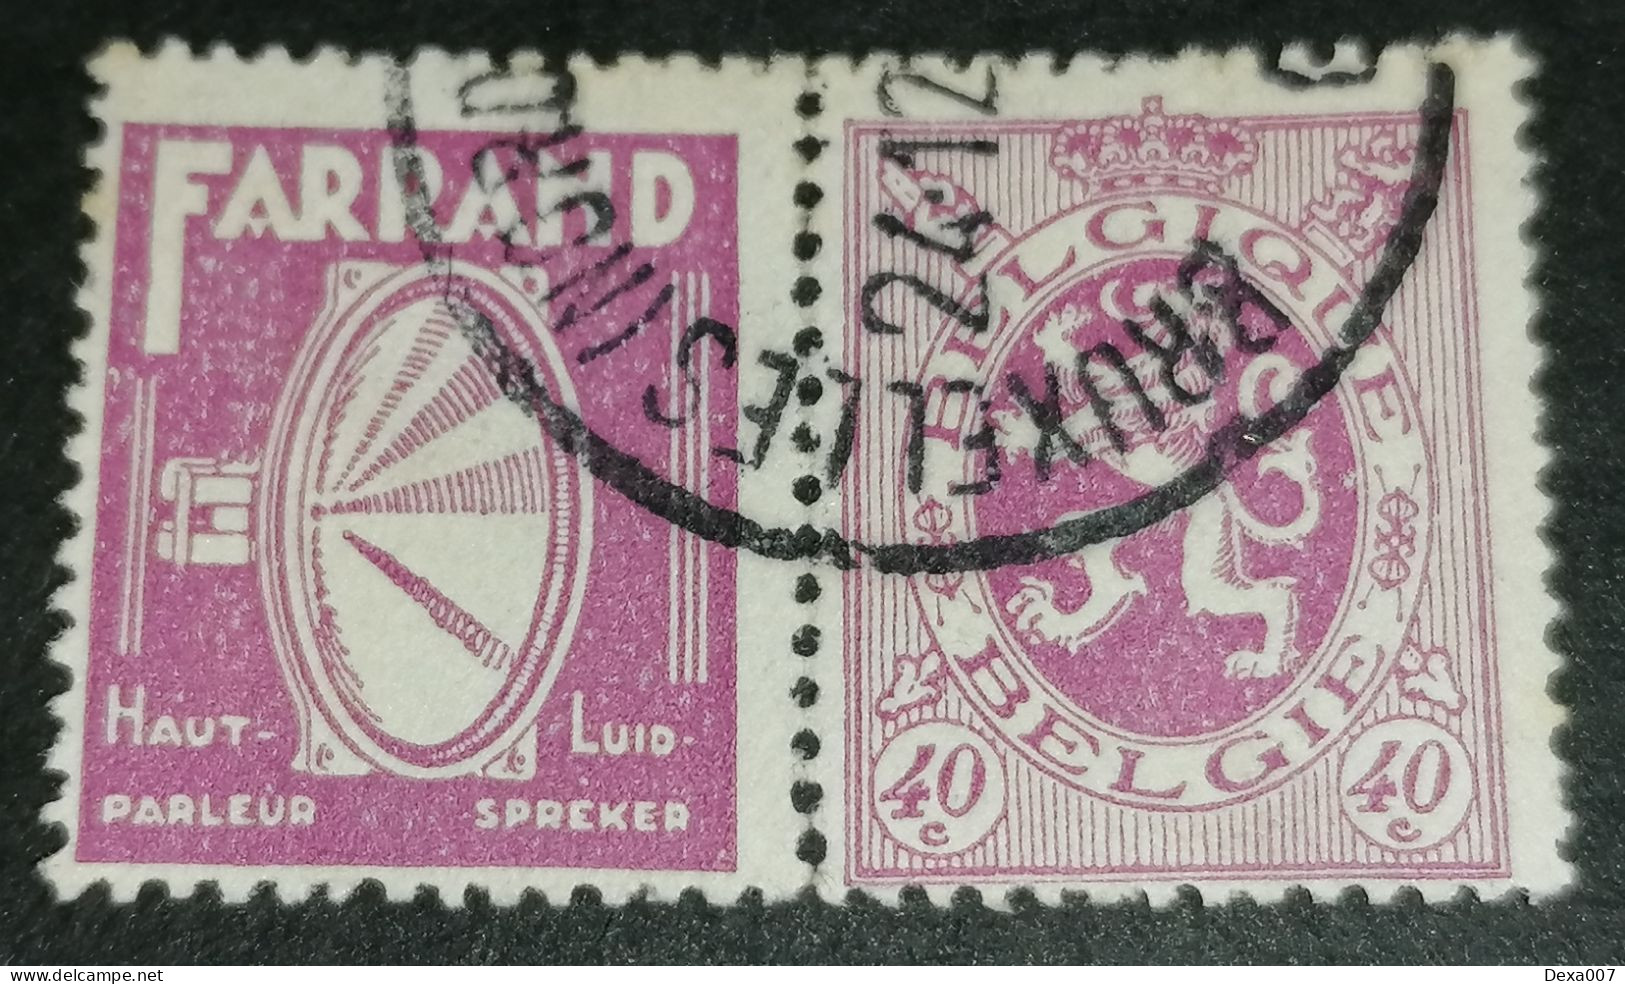 Belgium Advertising Stamp Farrand Nr.2 - Used